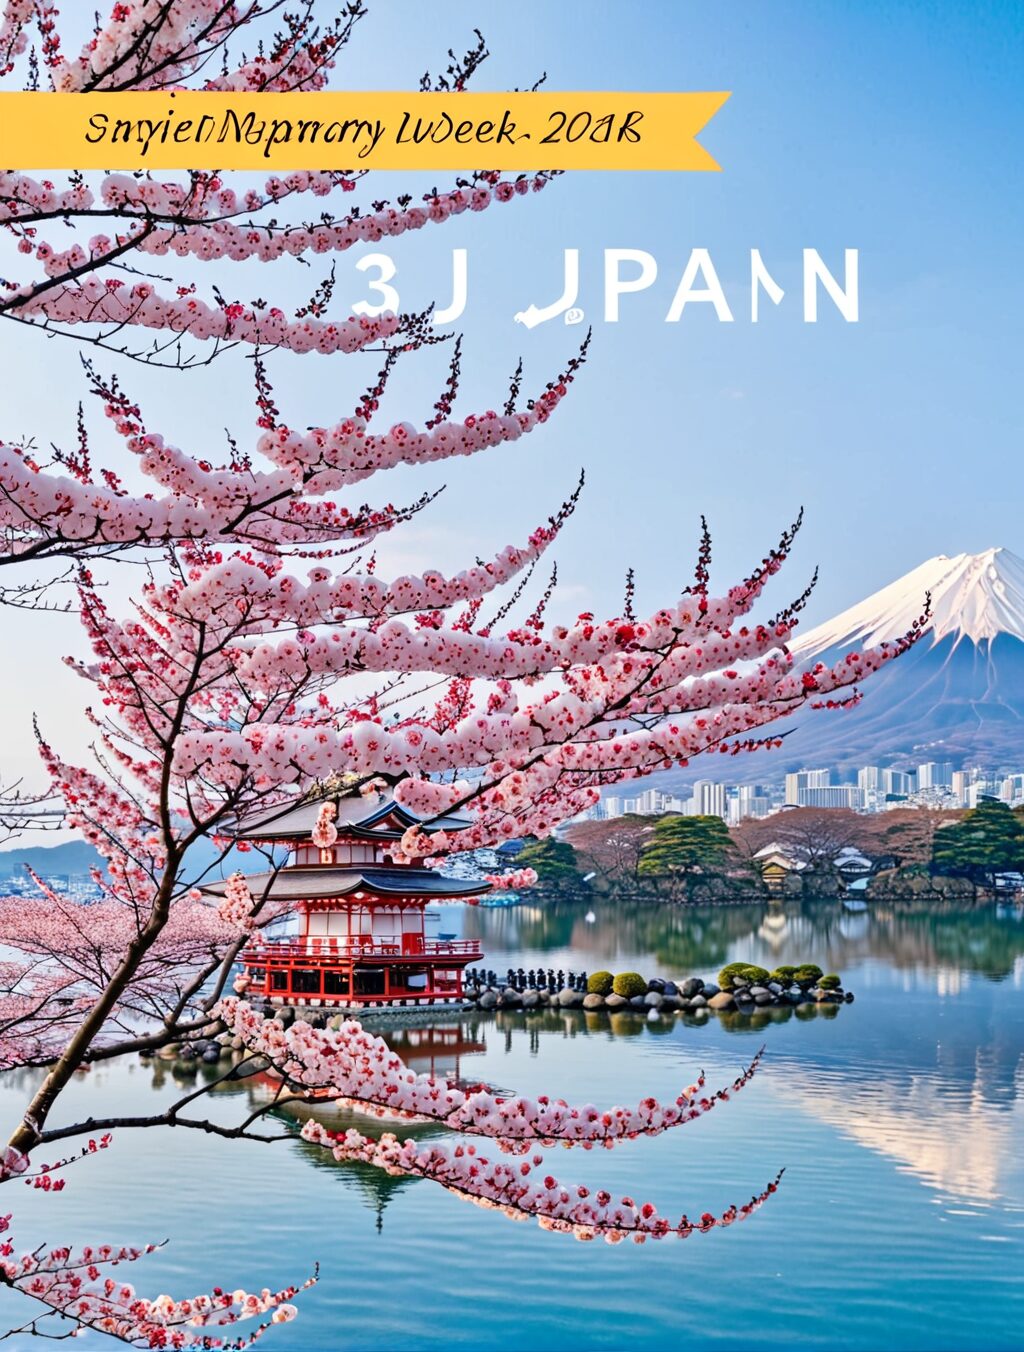 japan 3 week itinerary january